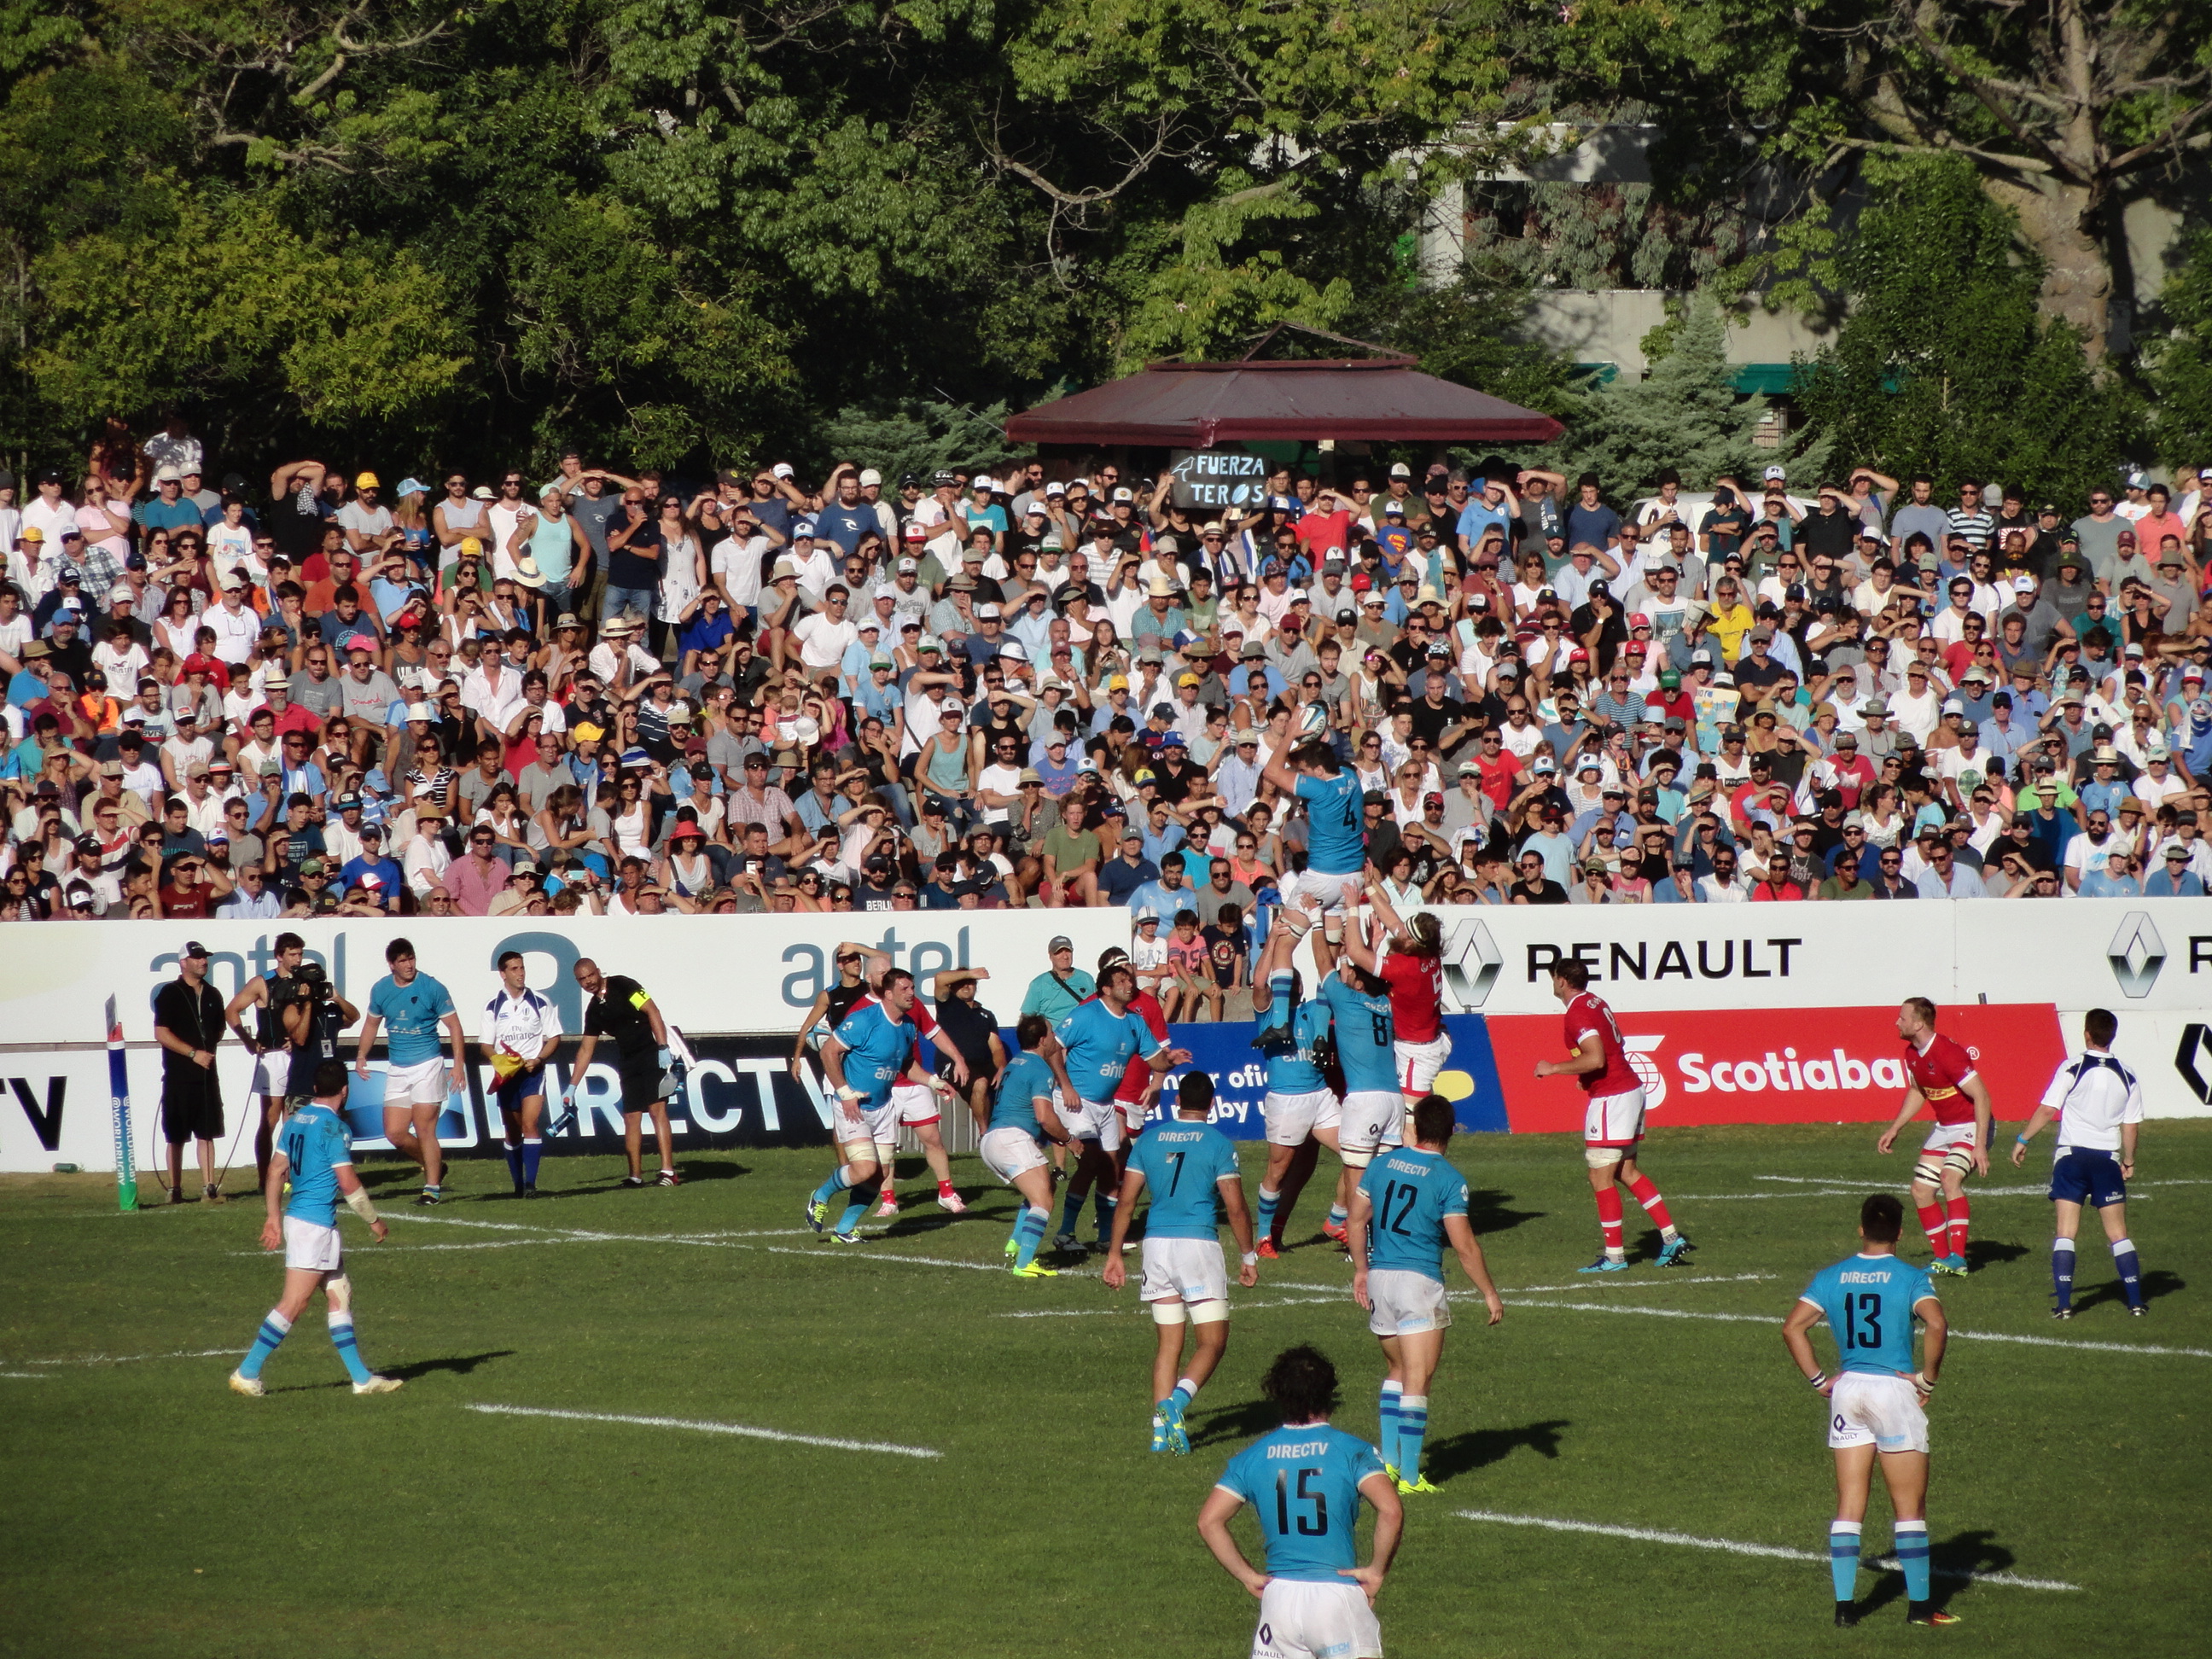 10+ Campeonato Mundial De Rugby Union 2019 fotos de stock, imagens